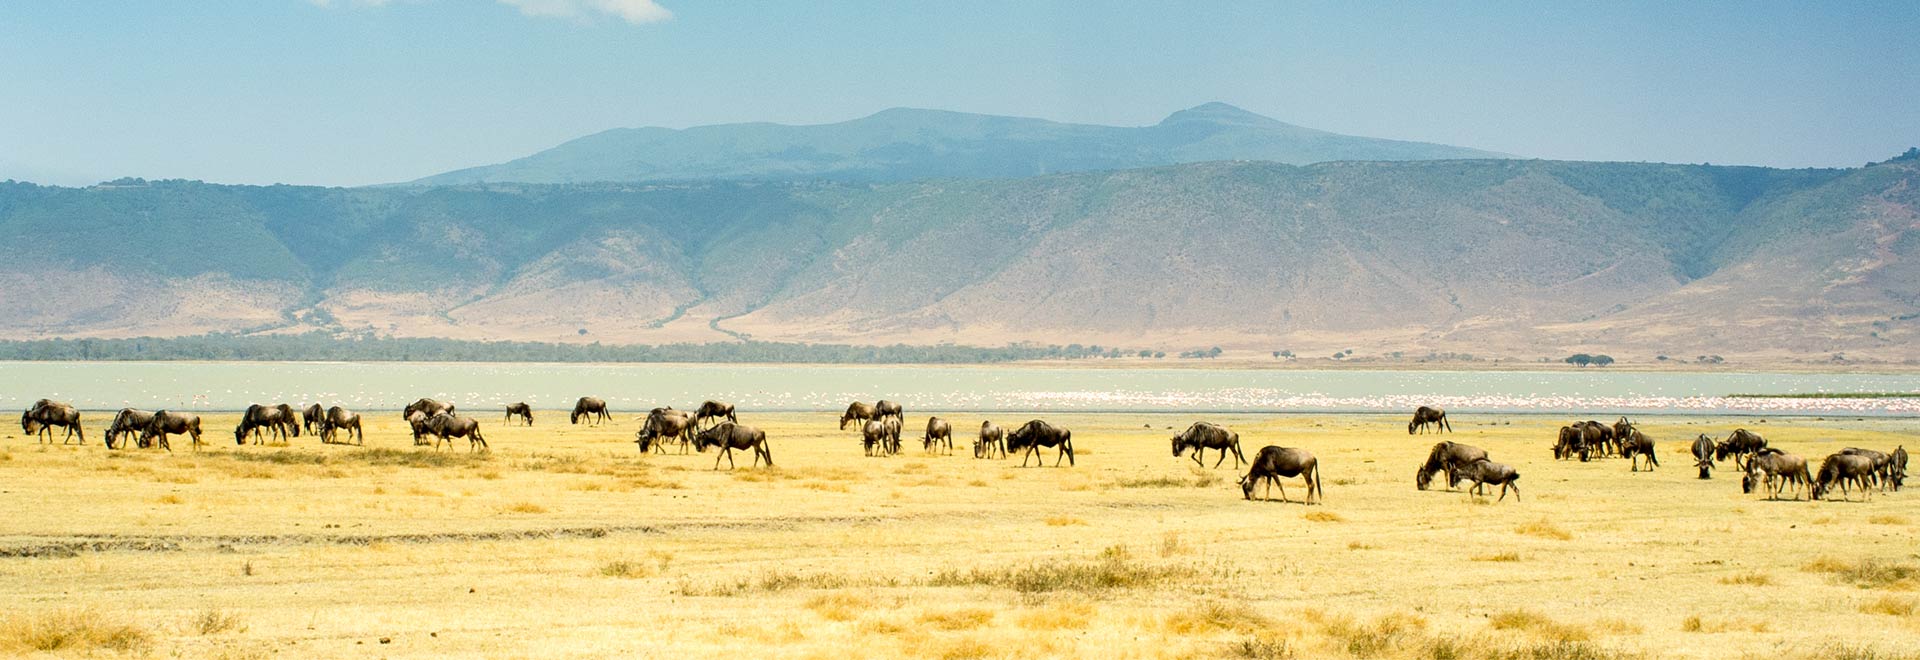 Africa Tanzania Herd